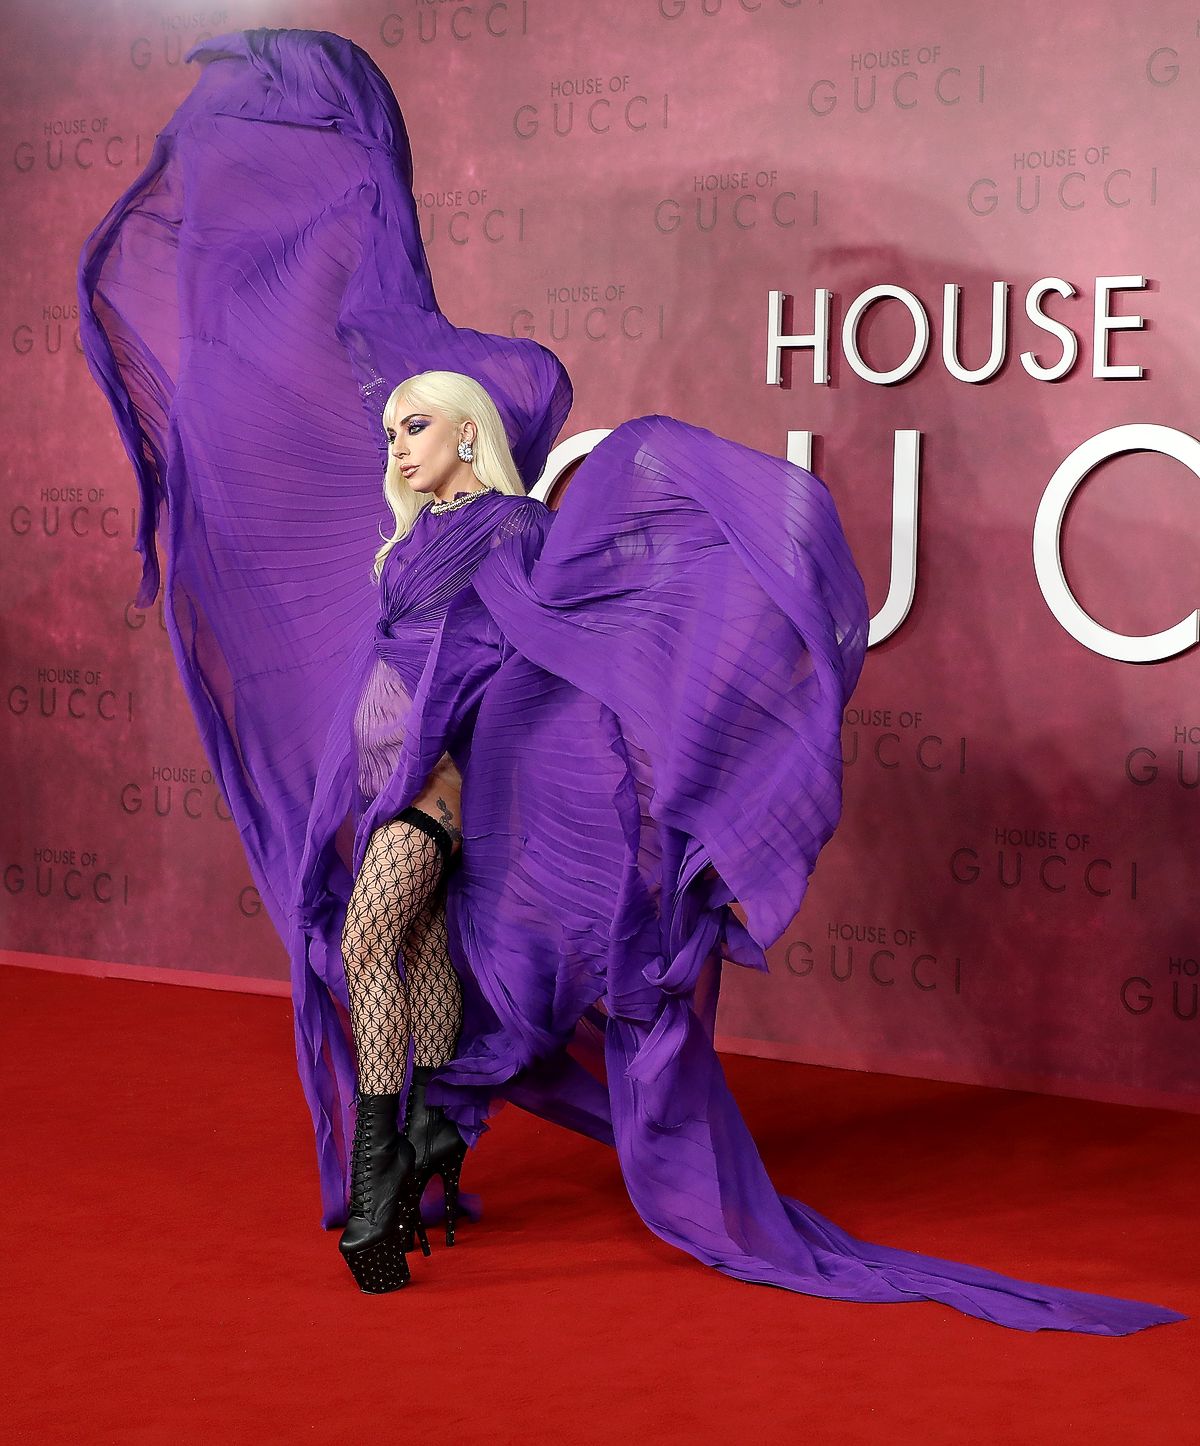 Леди Гага в Gucci Pre-Fall 2022, украшениях Tiffany & Co. на премьере фильма «Дом Gucci» в Лондоне, фото 2